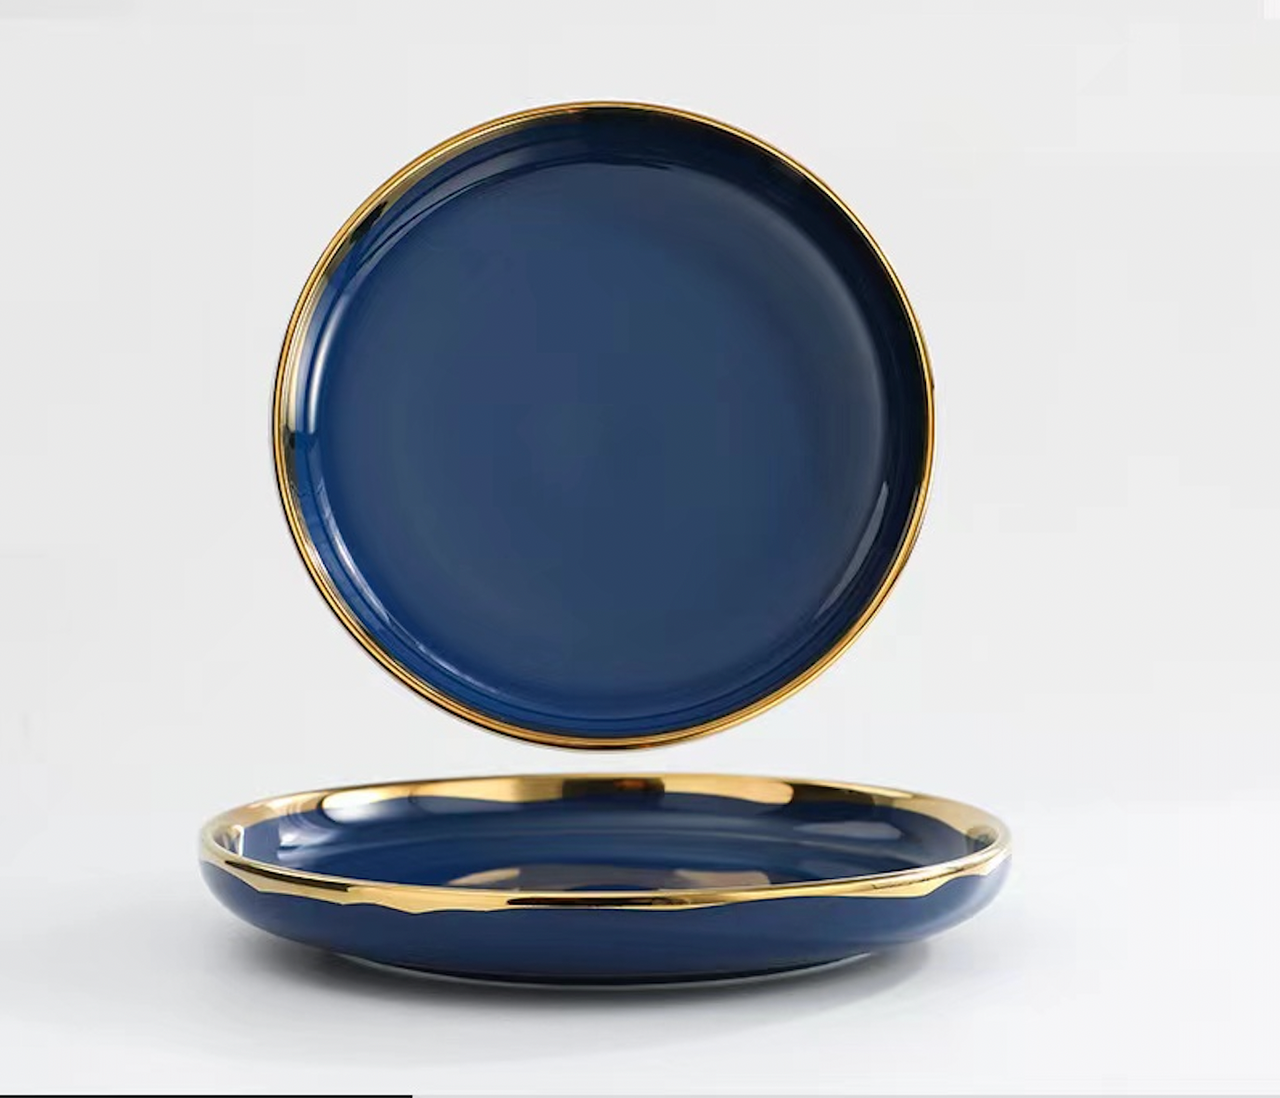 Blue & Gold Porcelain Plate